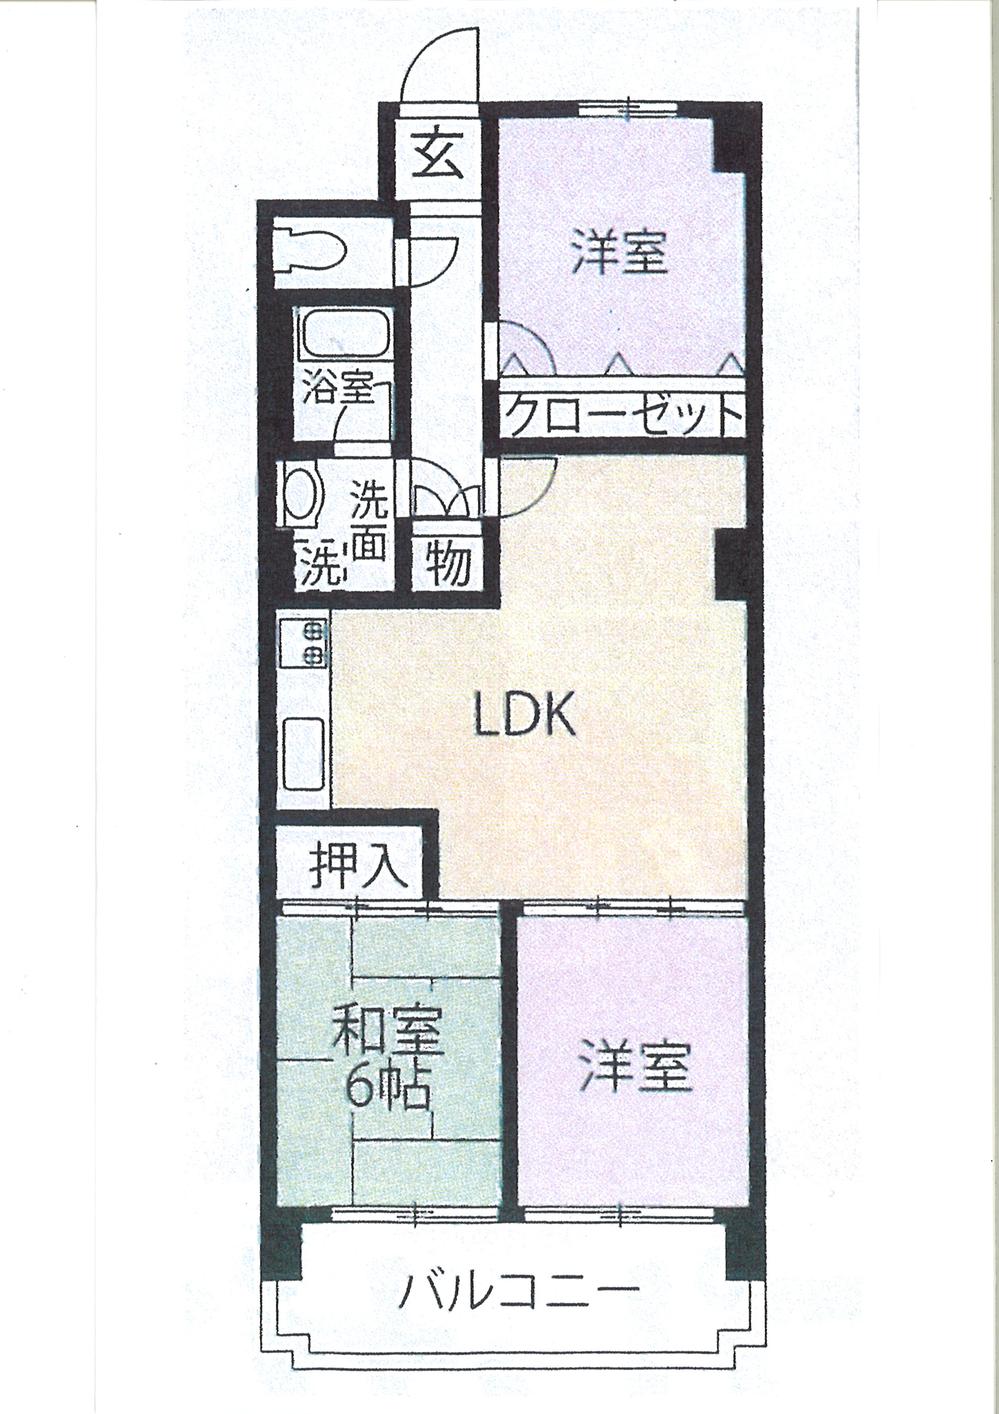 Floor plan. 3LDK, Price 9.5 million yen, Footprint 64.8 sq m